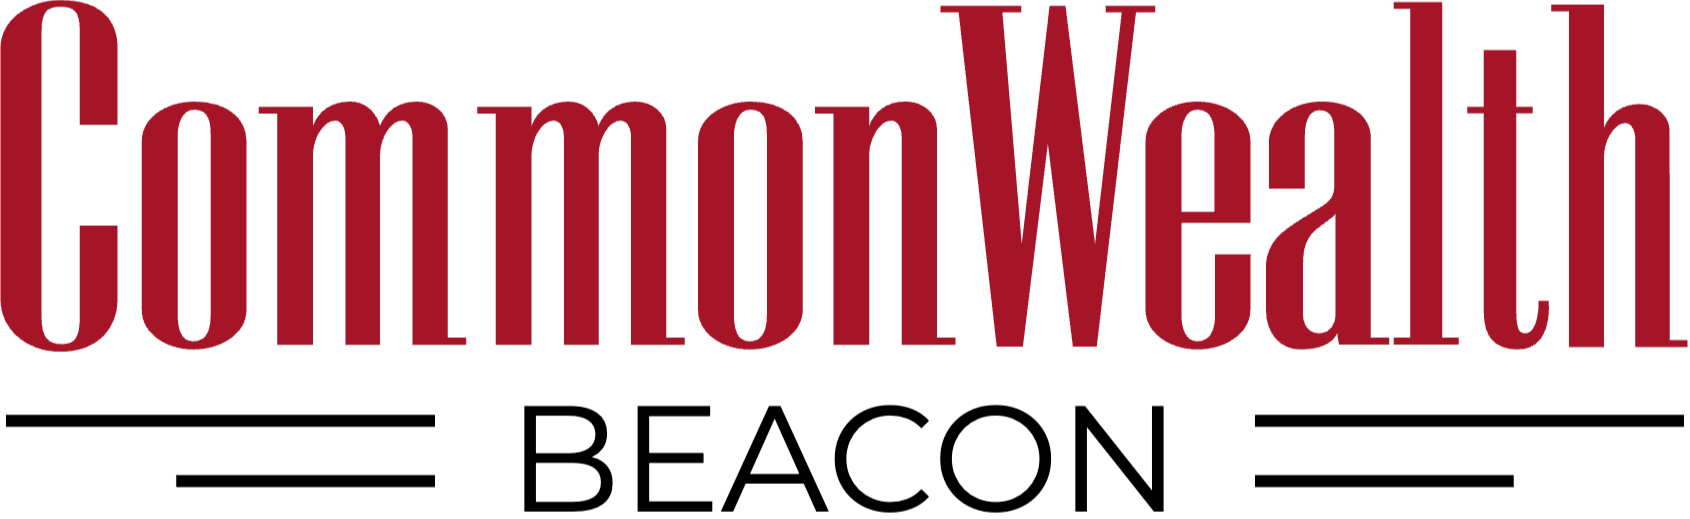 The Massachusetts Institute for a New Commonwealth, Inc. logo logo